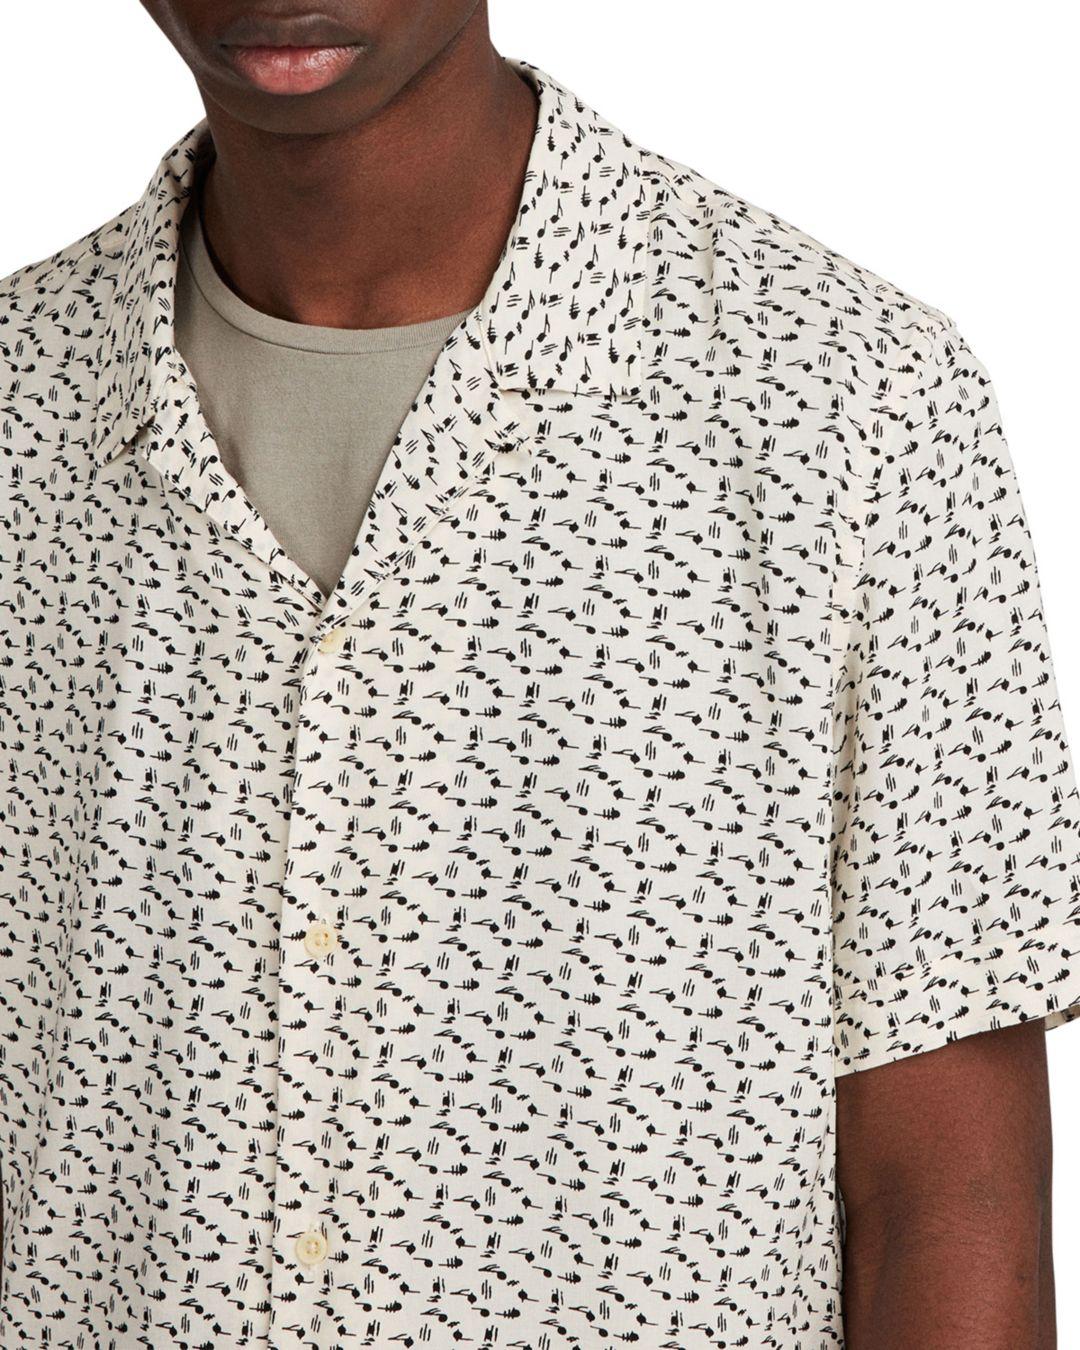 AllSaints Synthetic Notes Short - Sleeve Sport Shirt in Ecru White (White)  for Men - Lyst